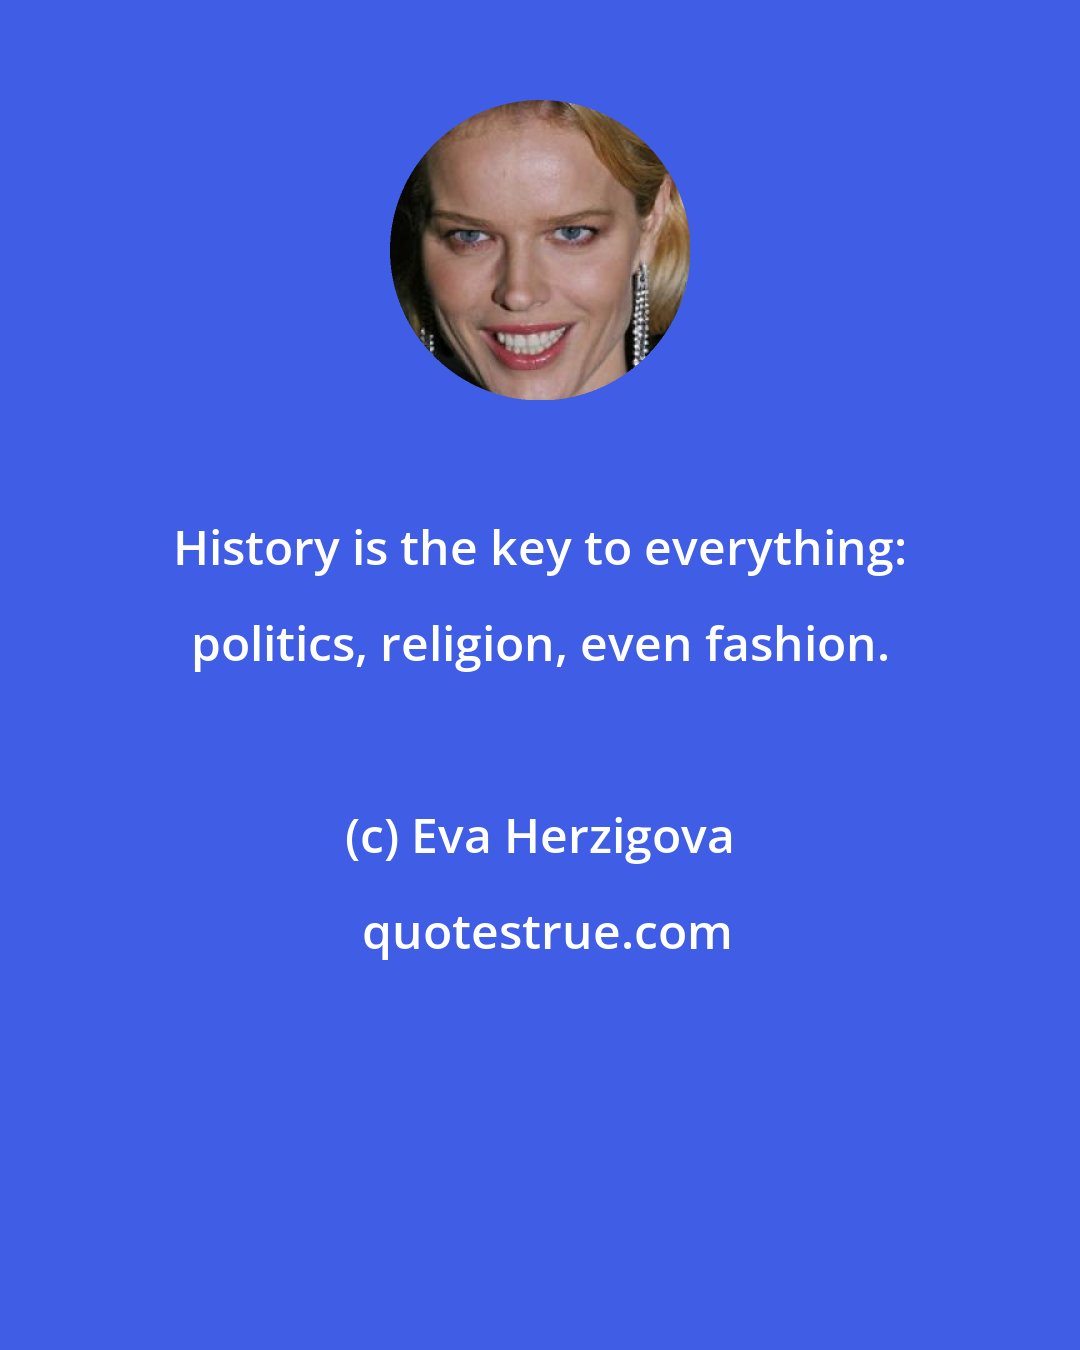 Eva Herzigova: History is the key to everything: politics, religion, even fashion.